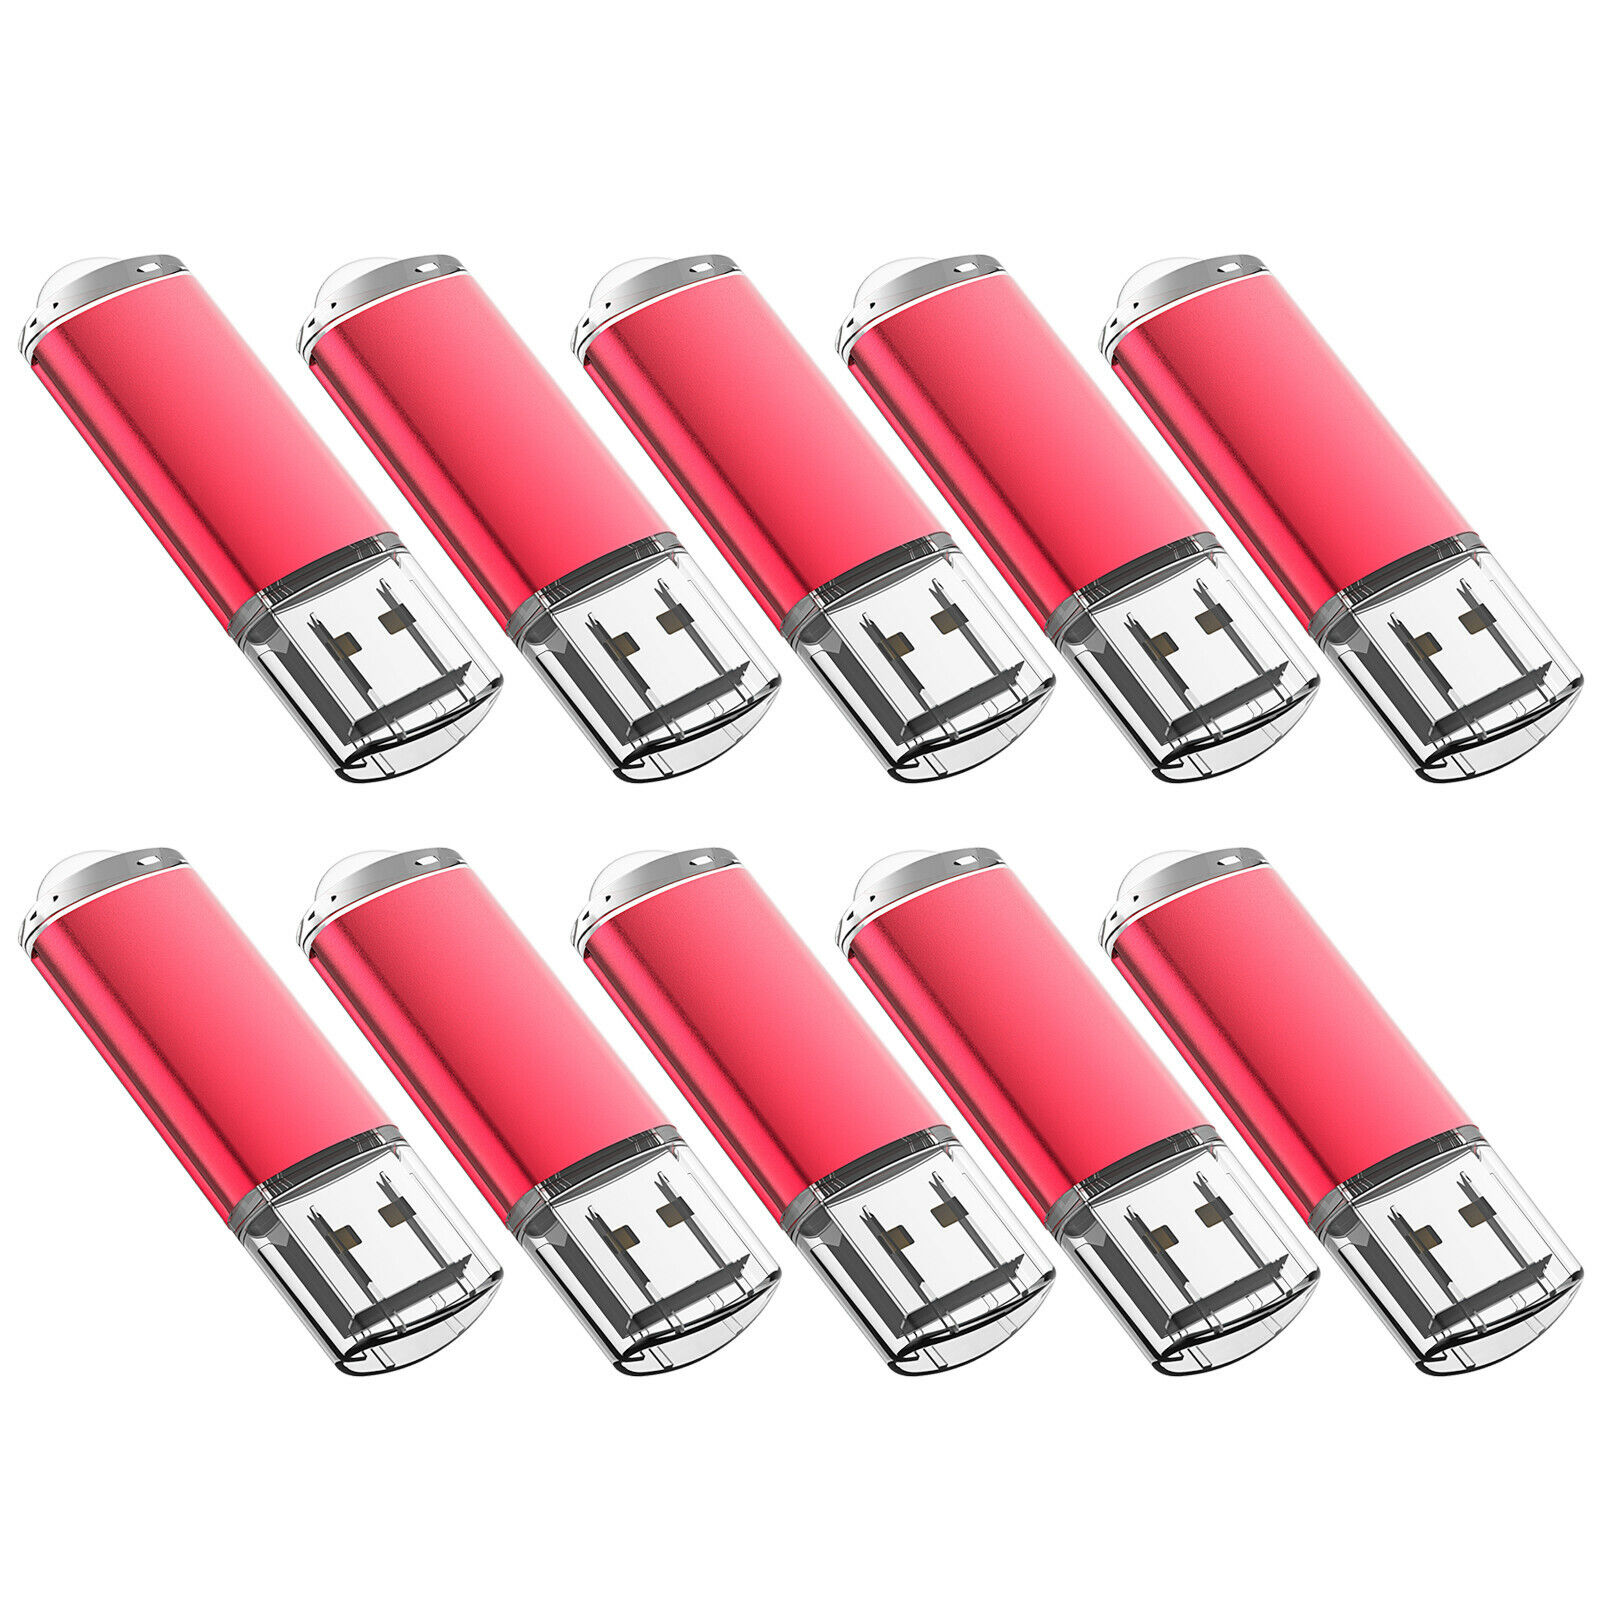 Red USB 2.0 10pack Metal Rectangle Flash Drives Data Storage 1g 2g 4g 8g 16g 32g